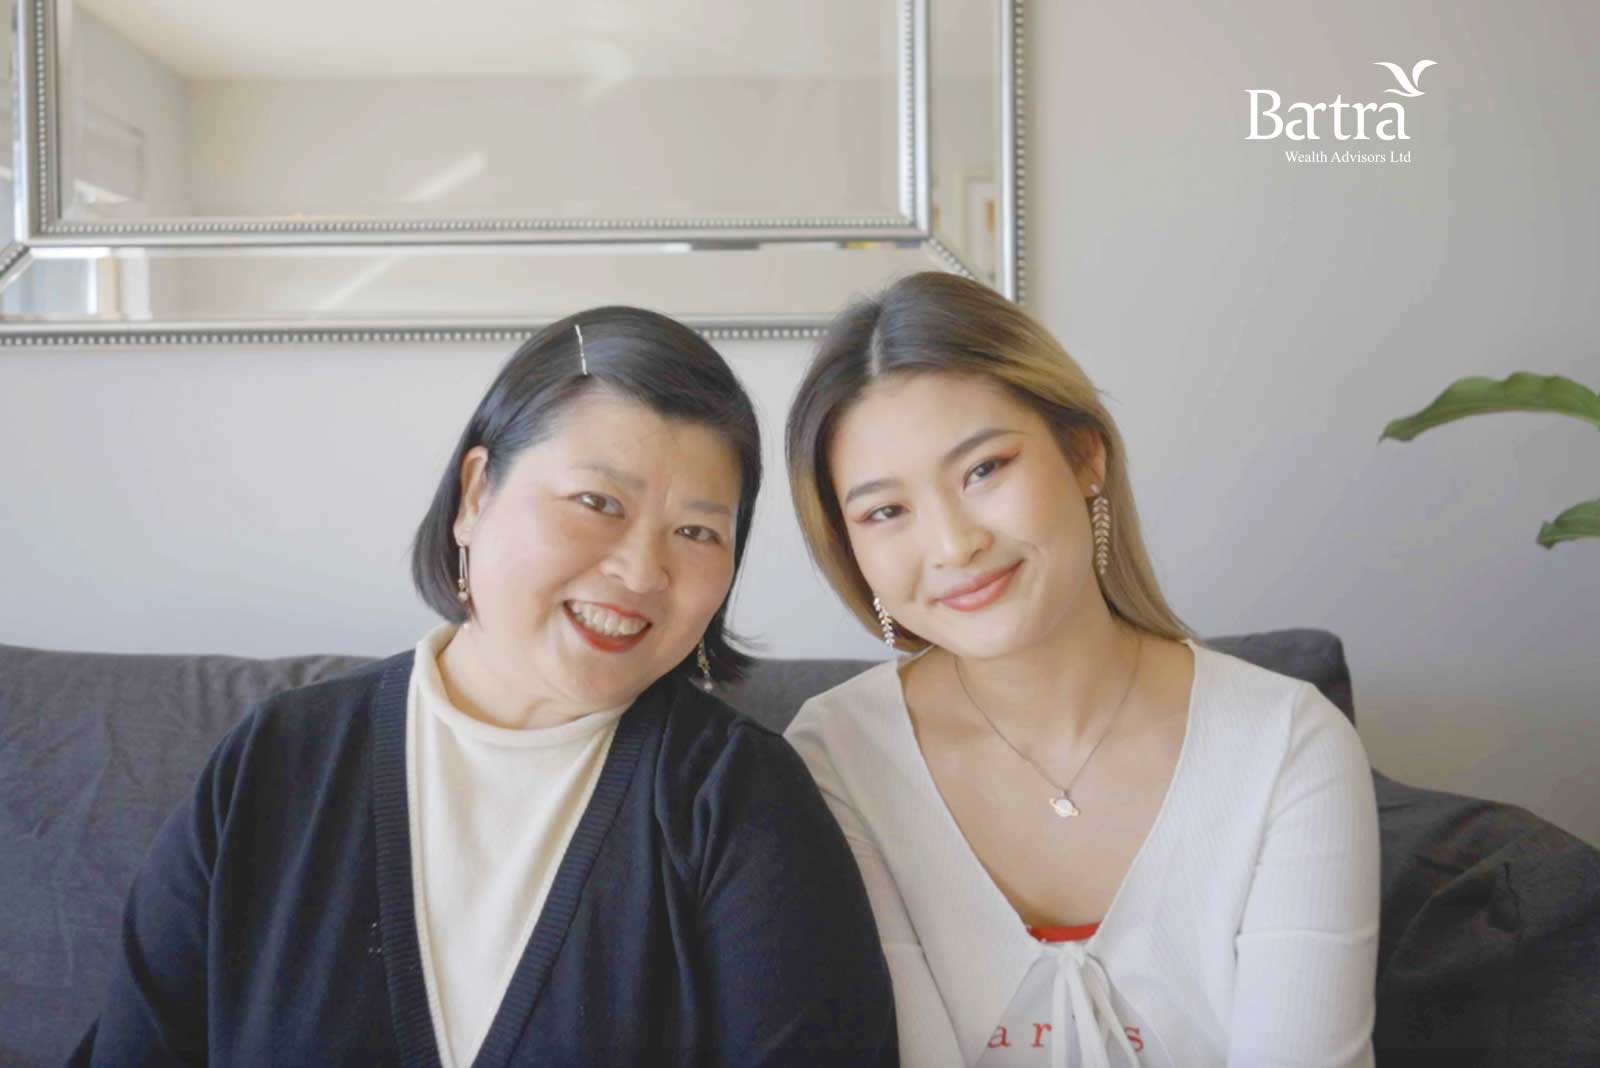 Loughshinny療養院項目成功還款 – 投資者Luna Wu分享她的IIP旅程